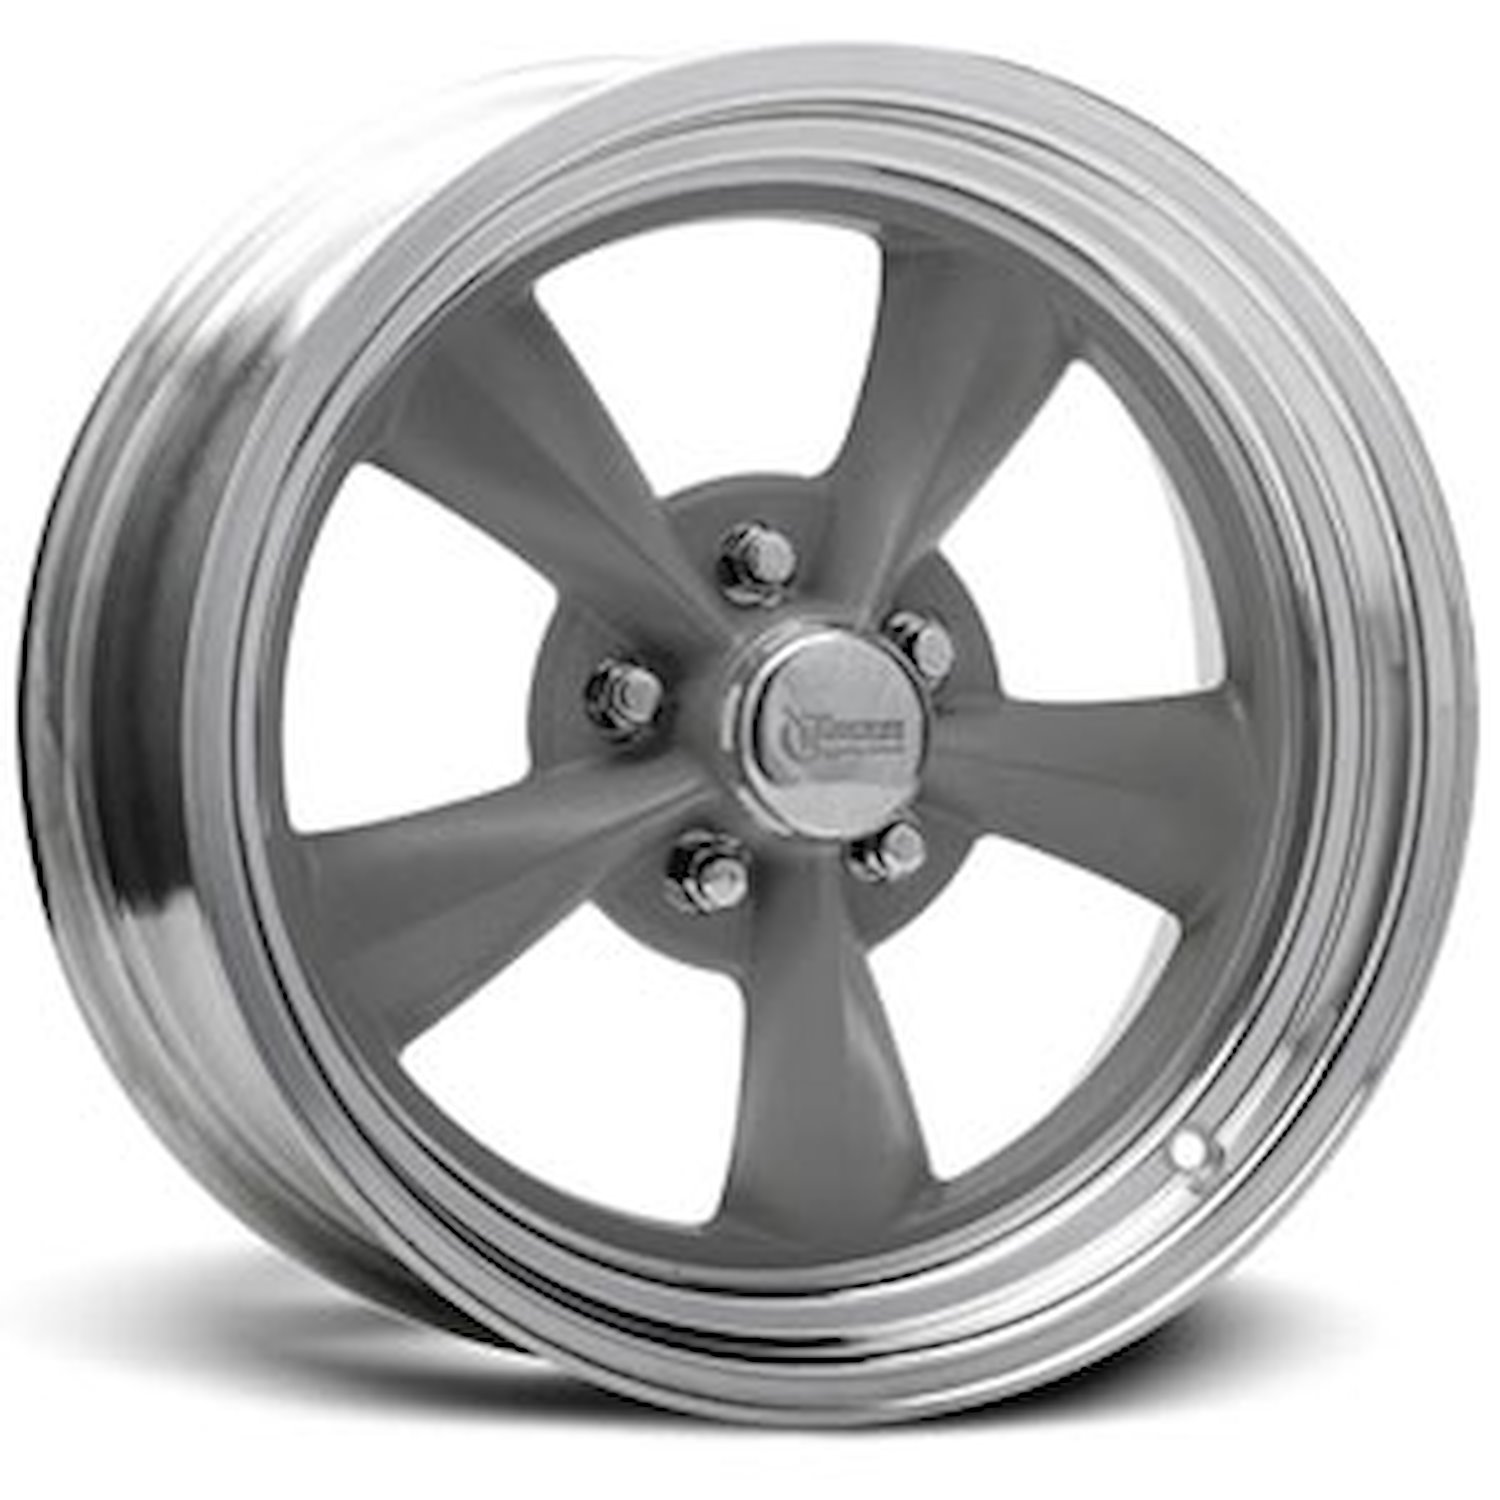 Fuel Wheel - Gray Size: 17" x 7"